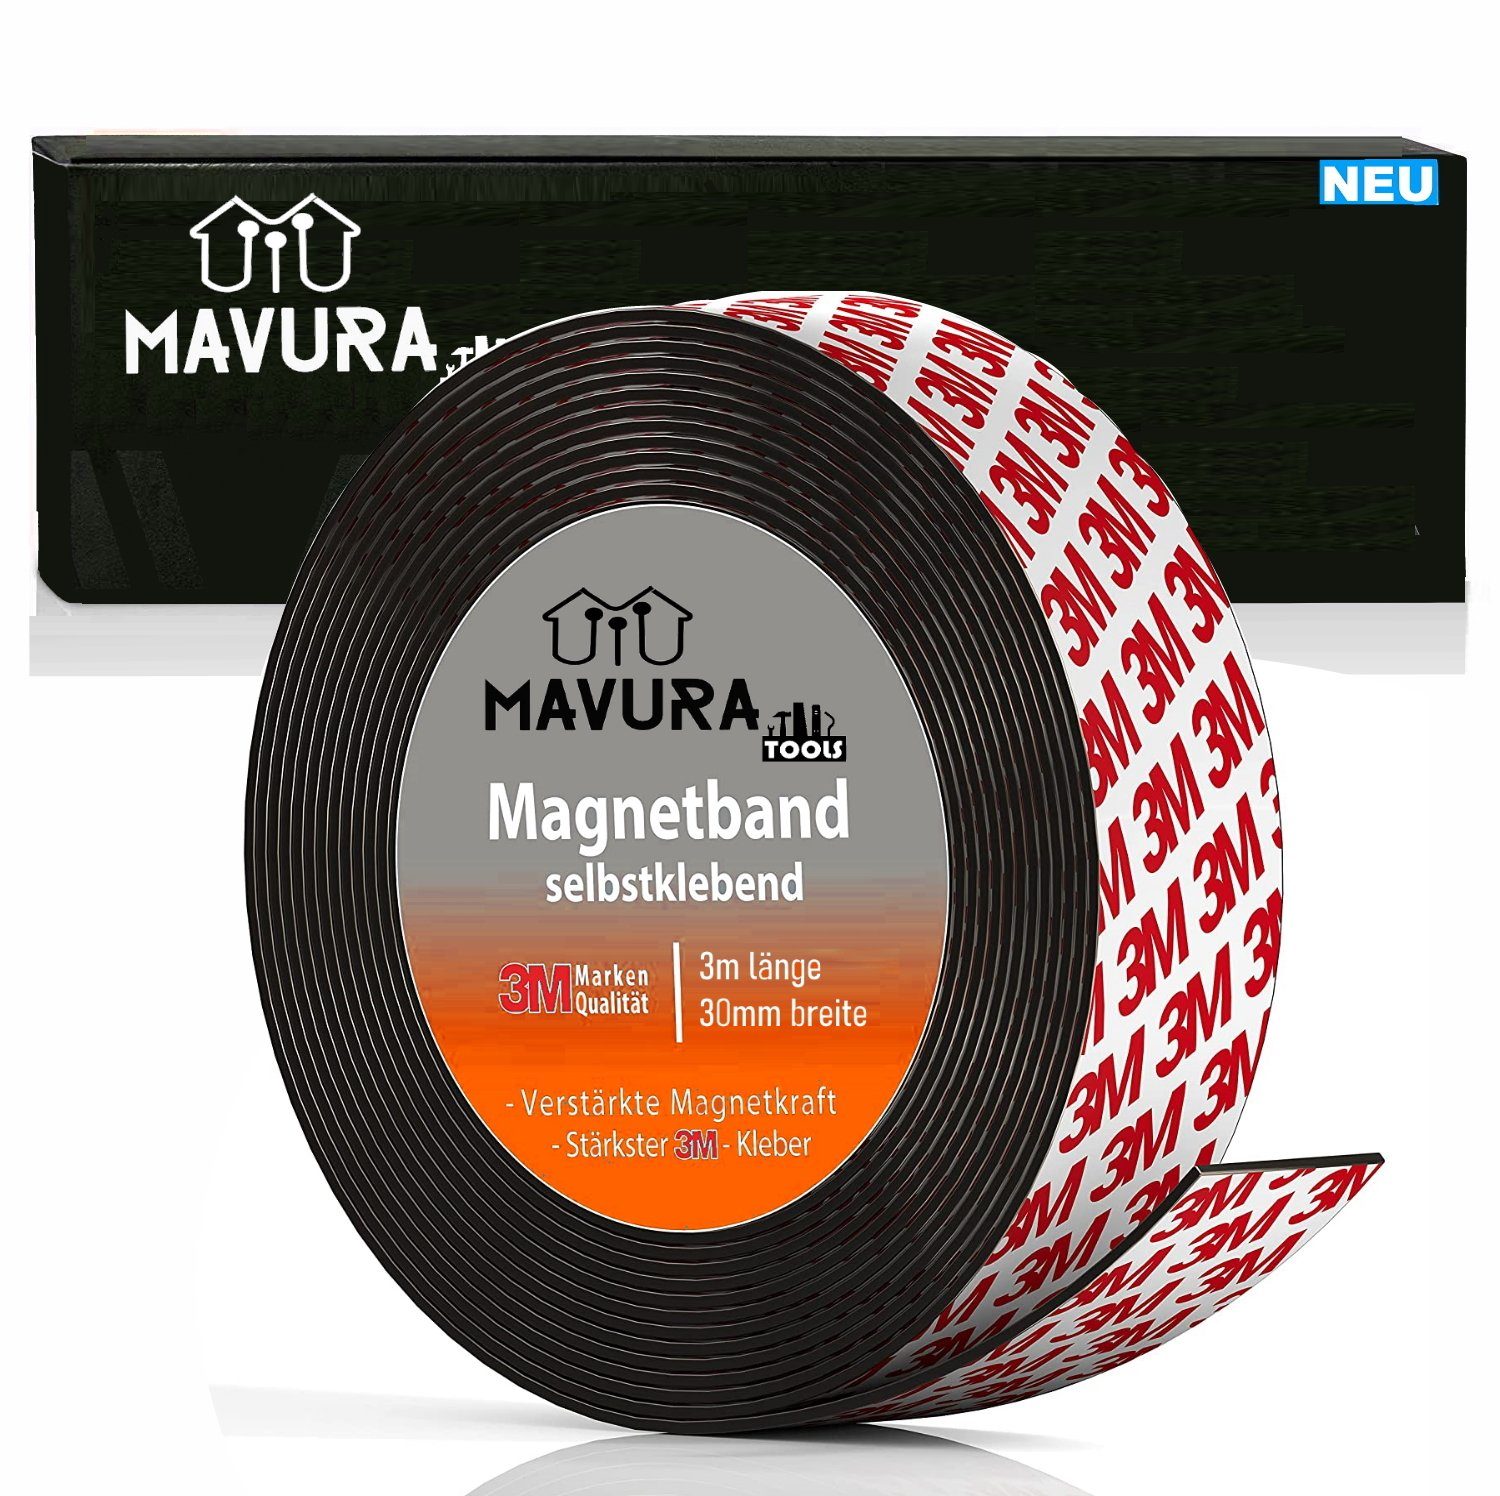 MAVURA Magnethalter Magnetband selbstklebend Magnetklebestreifen